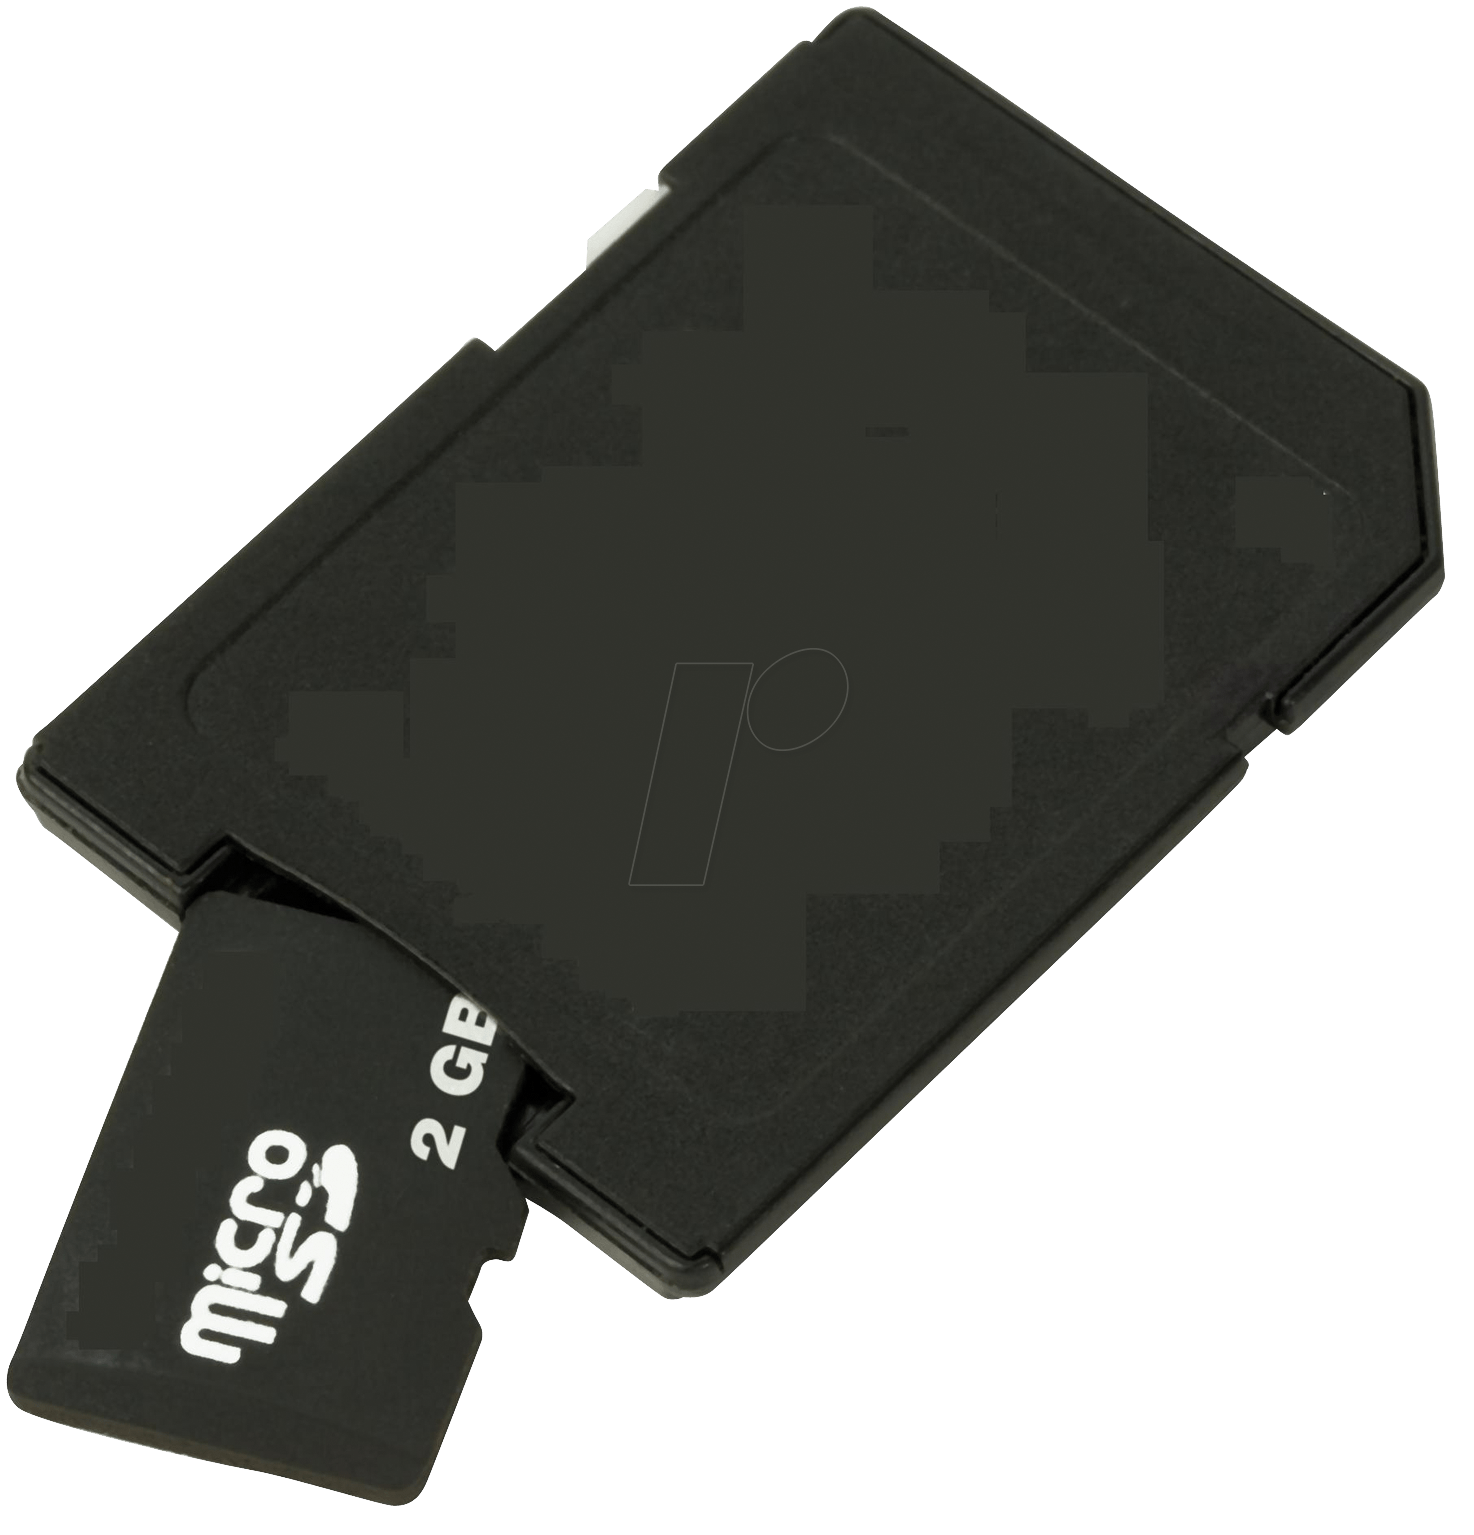 ADAPTER MSD - SD: Adaptateur Micro-SD vers carte SD chez reichelt